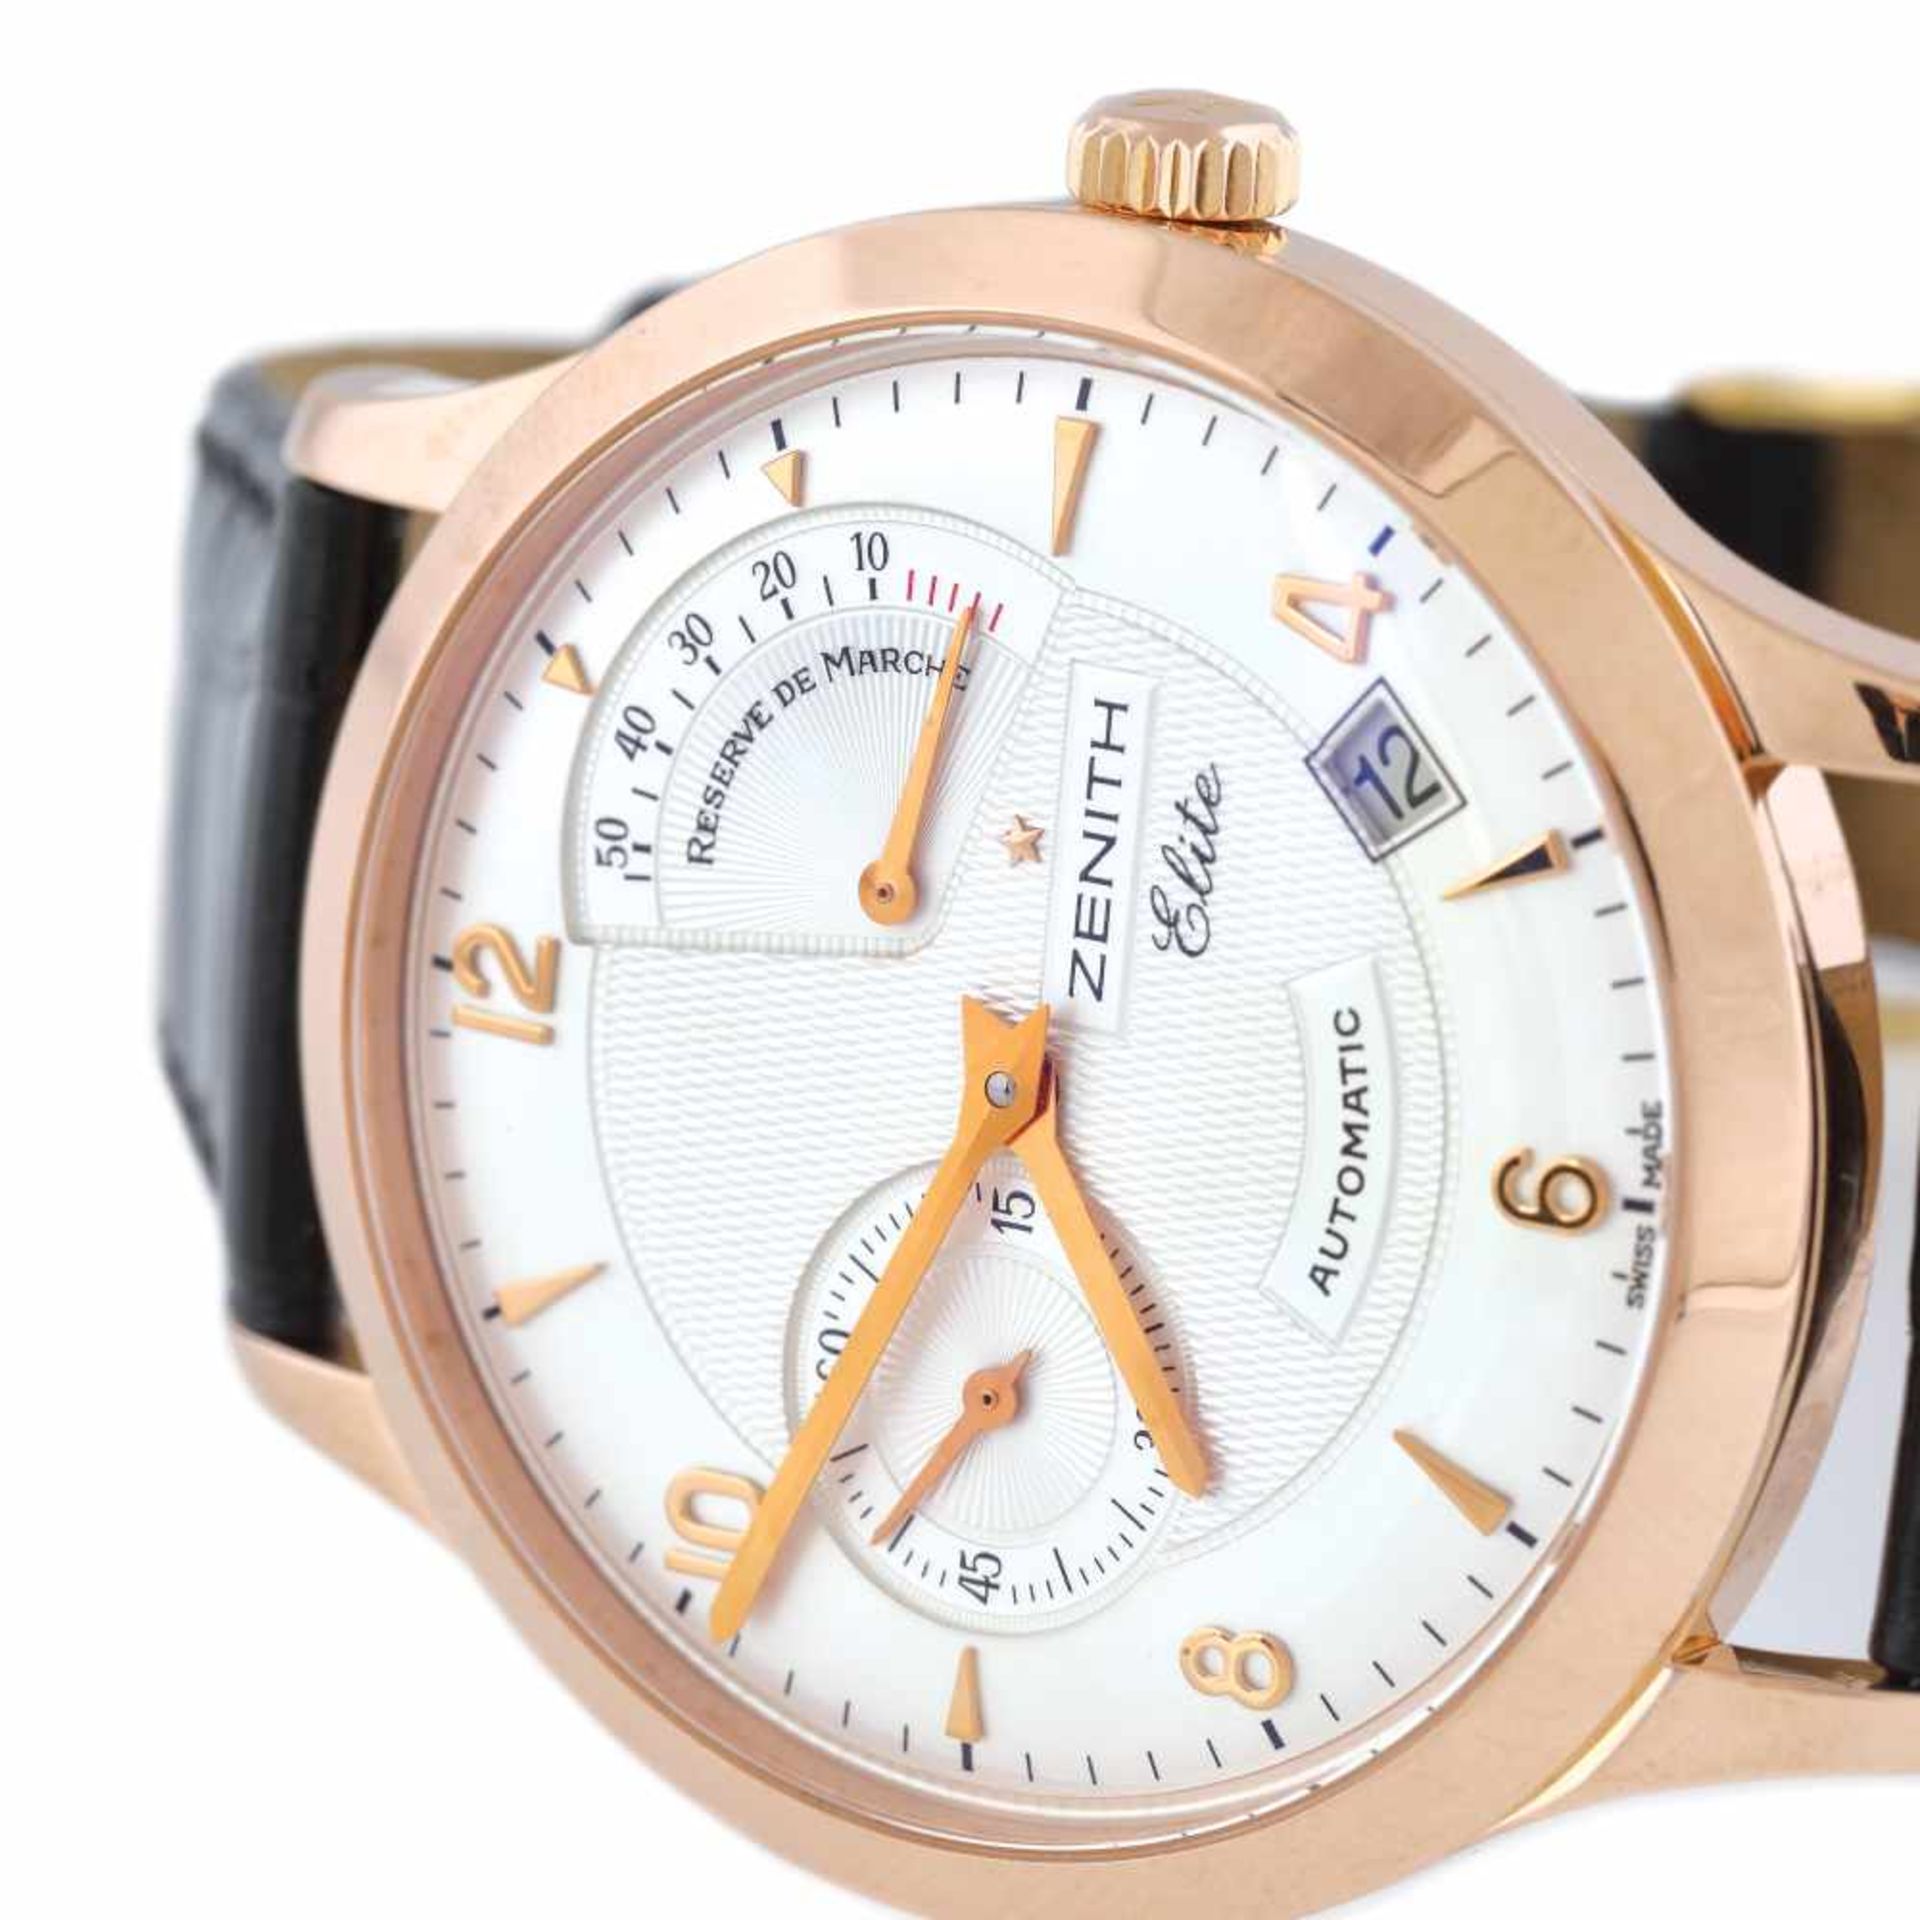 Zenith Class Elite wristwatch, rose gold, men, provenance documents - Image 2 of 4